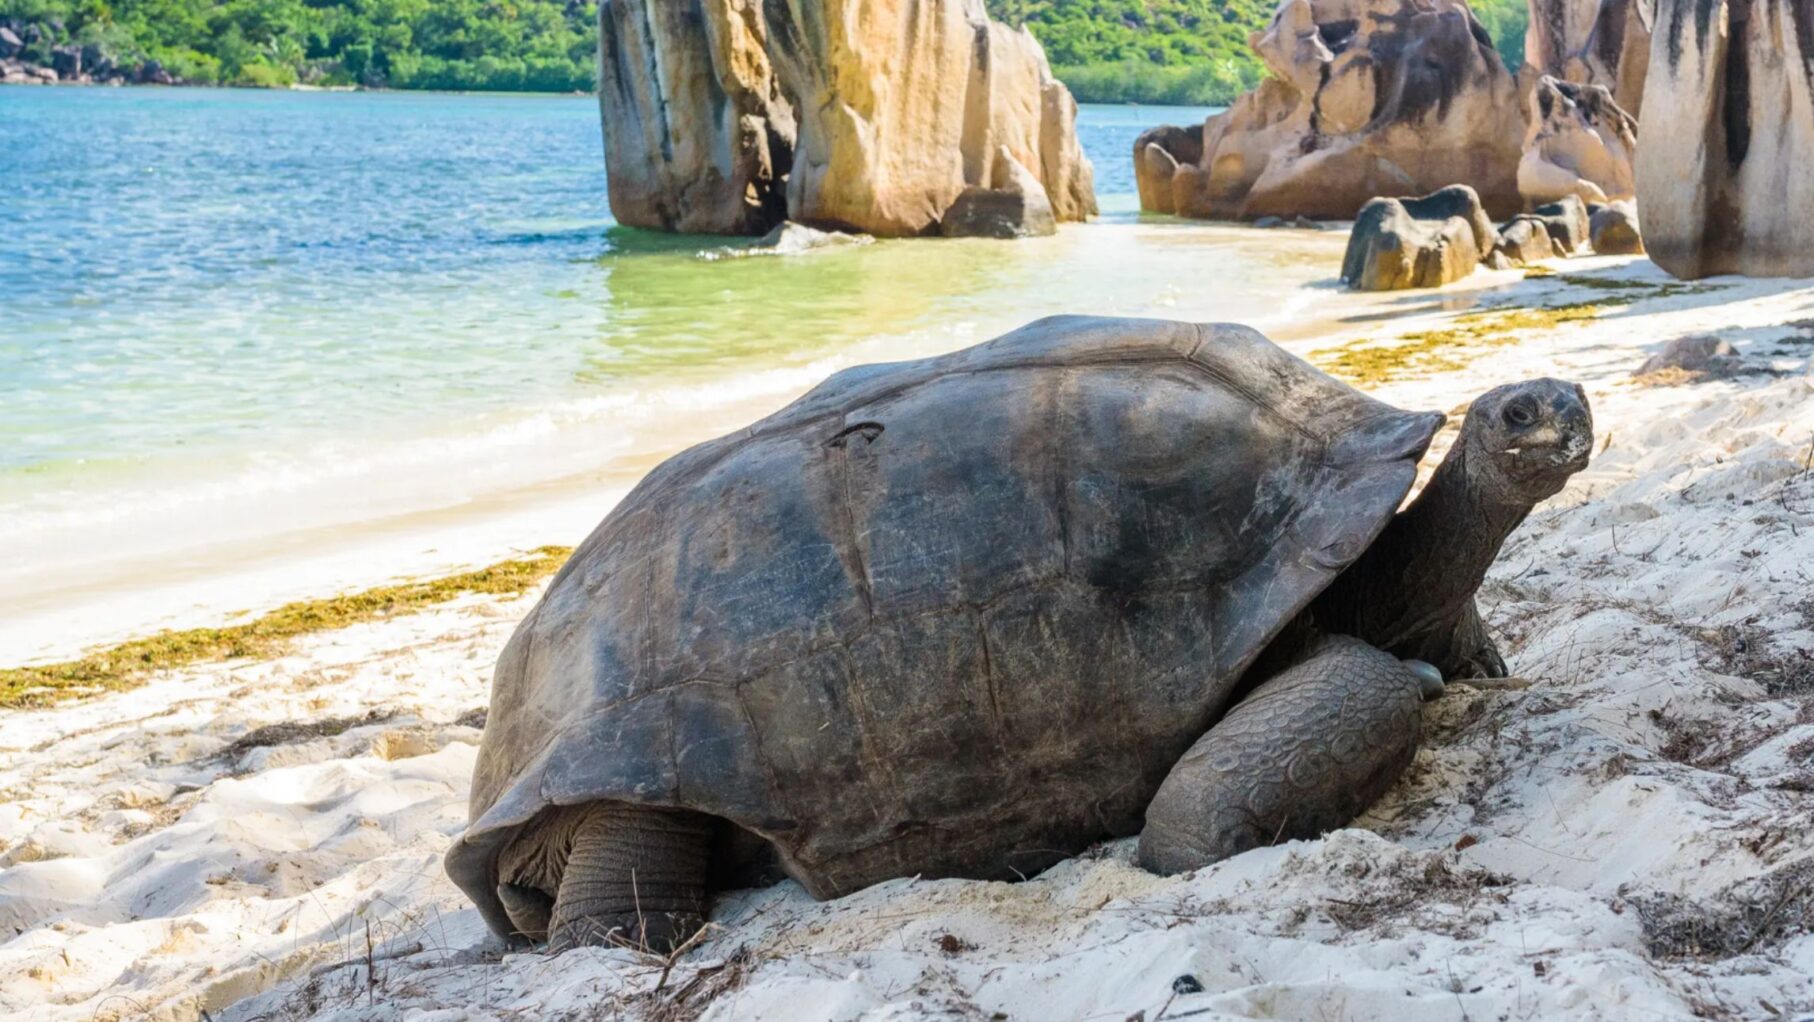 A turtle in Seychelles.